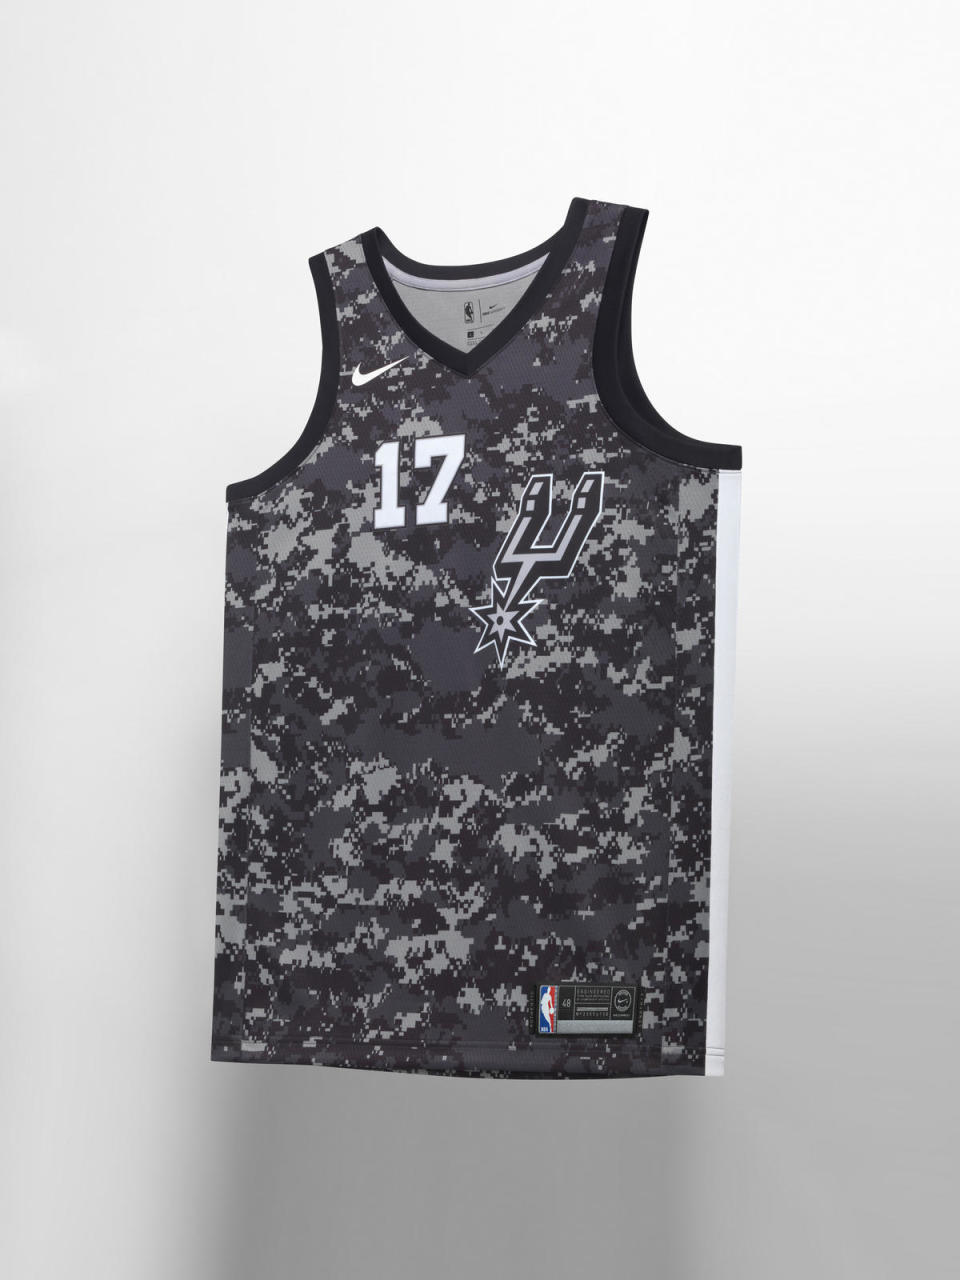 San Antonio Spurs City uniform. (Nike)